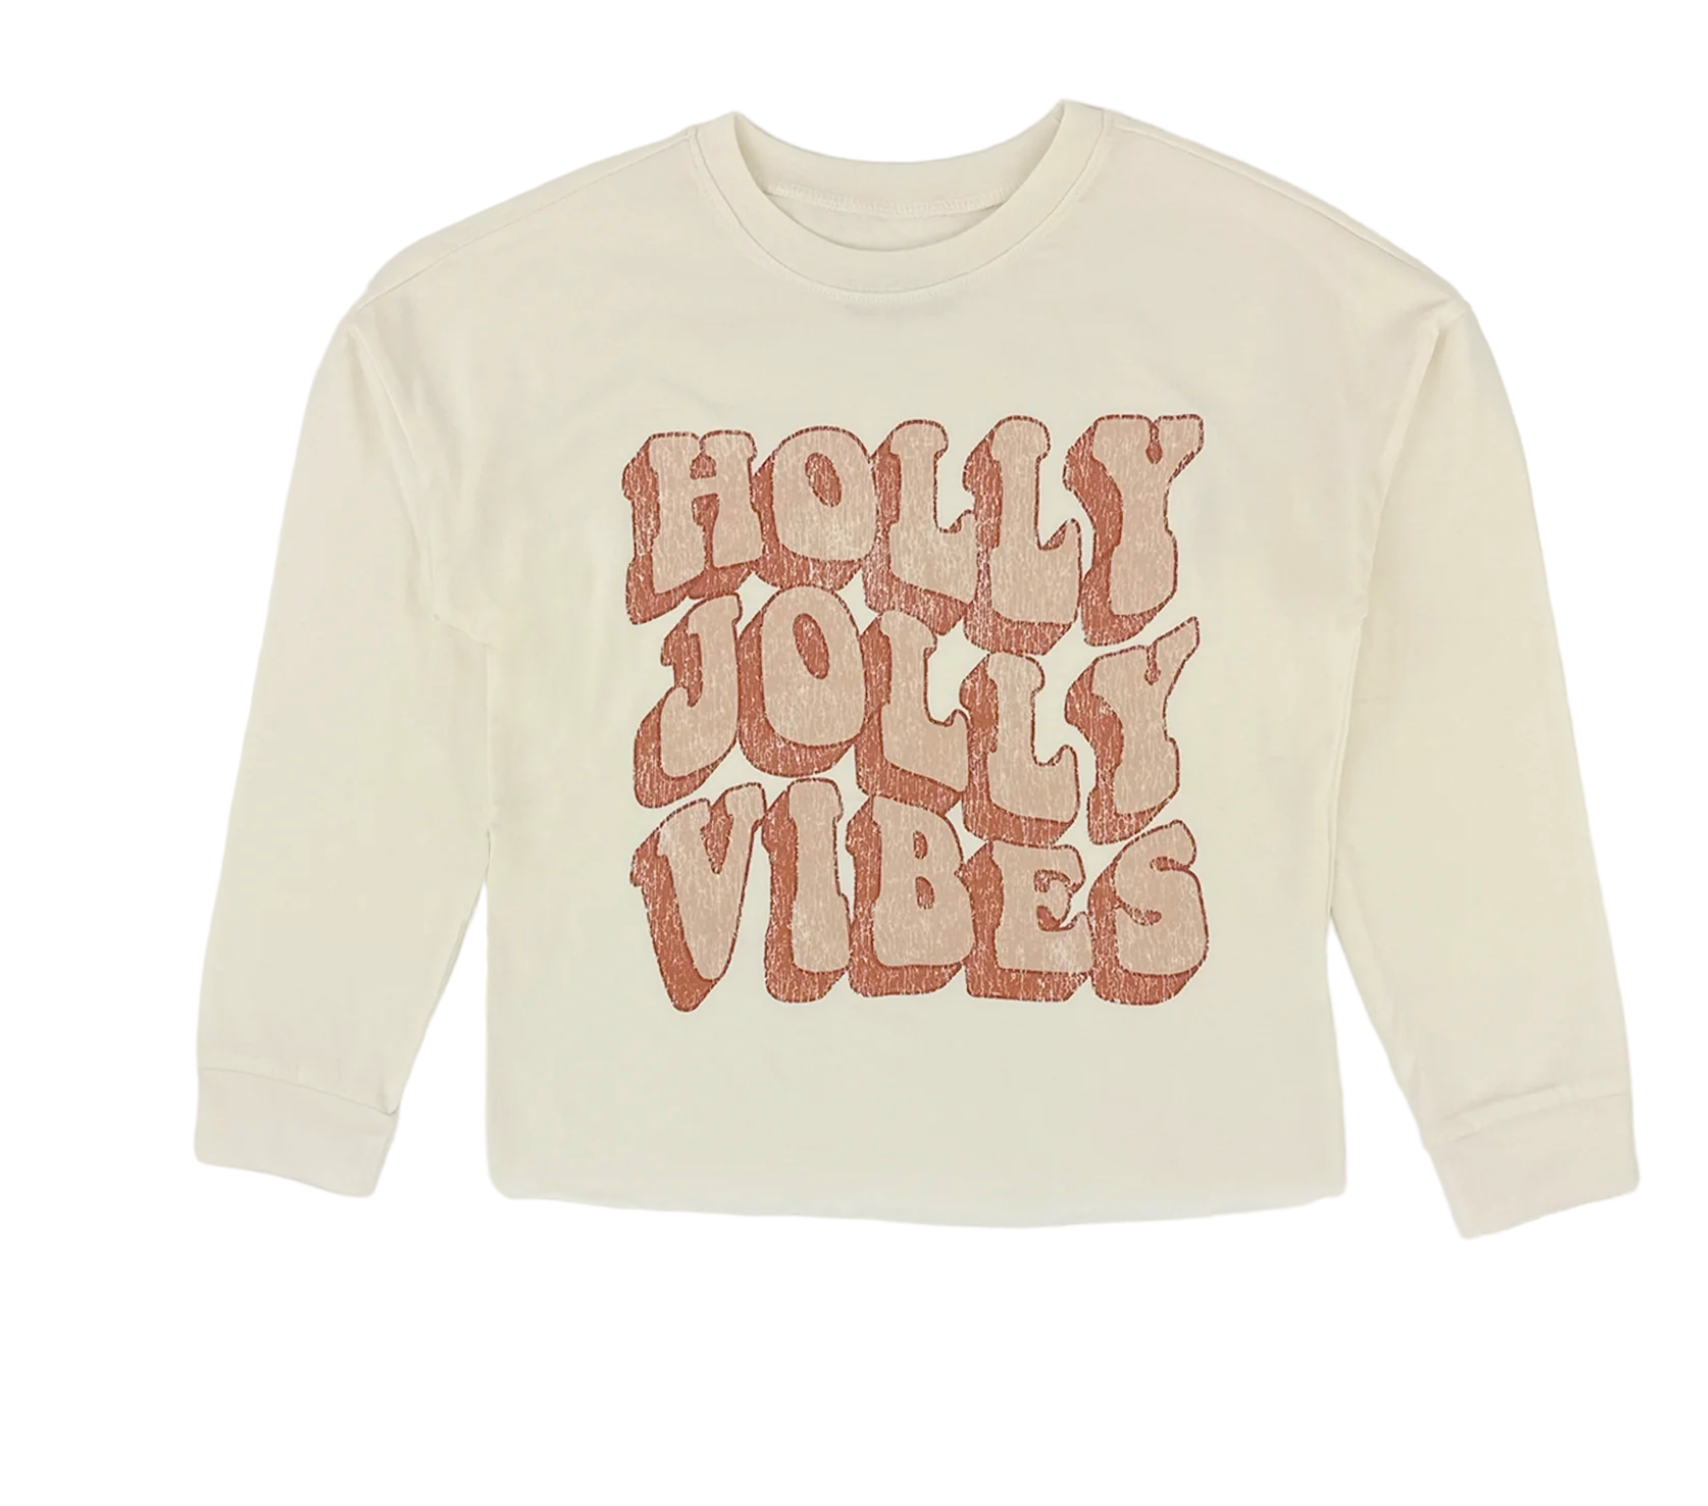 Long Sleeve Tee- Holly Jolly Vibes tiny whales christmas shirt